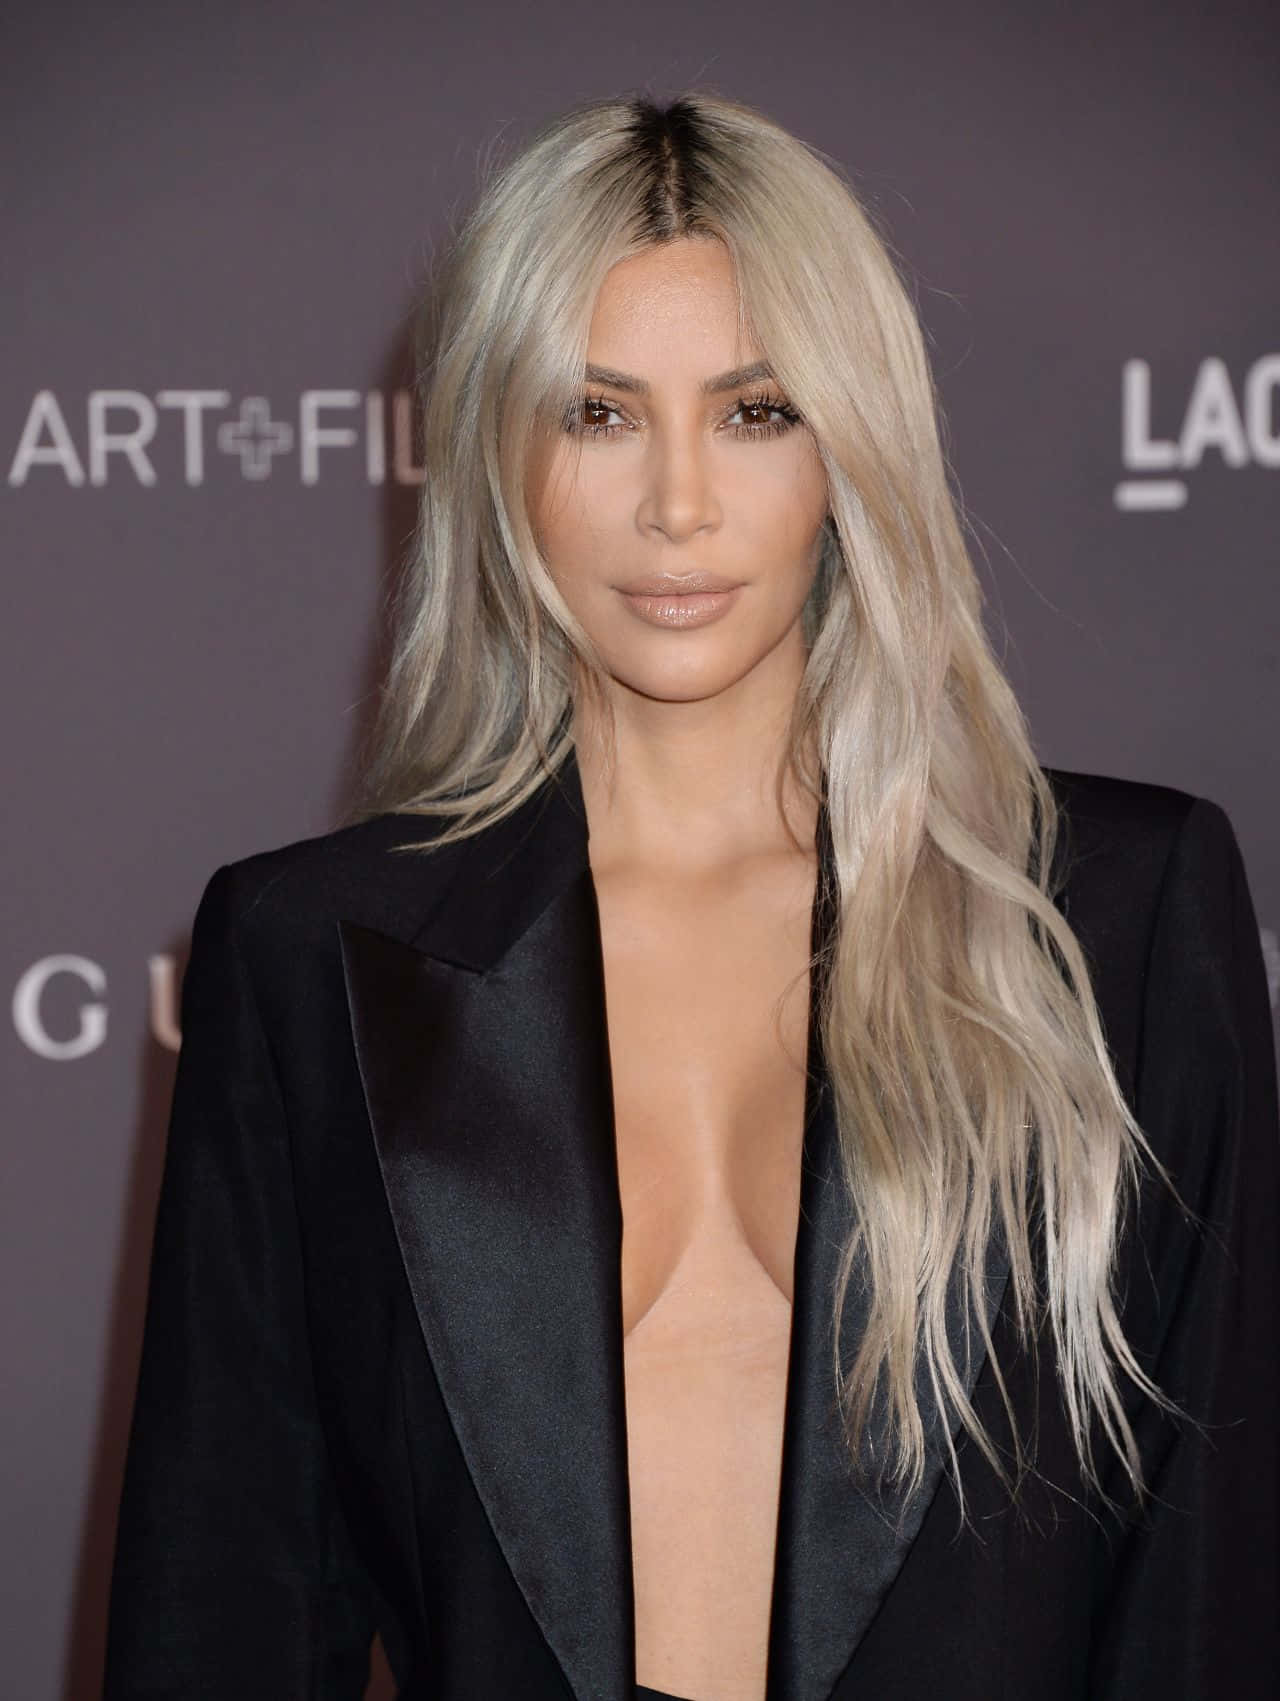 Kim Kardashian looking glam in a white dress.